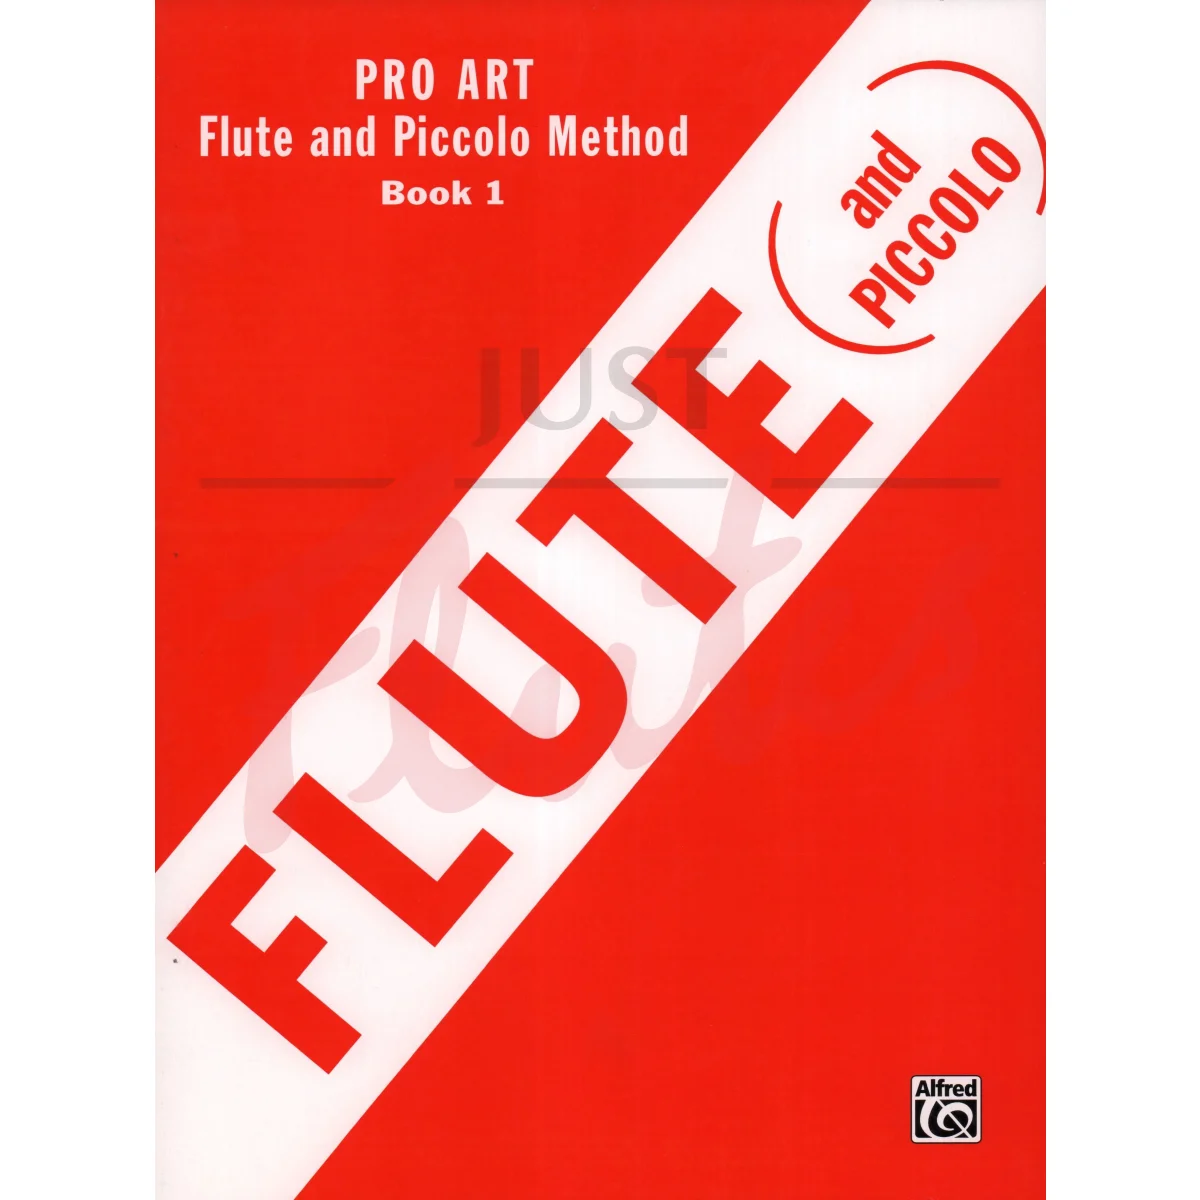 Pro Art Flute and Piccolo Method Book 1